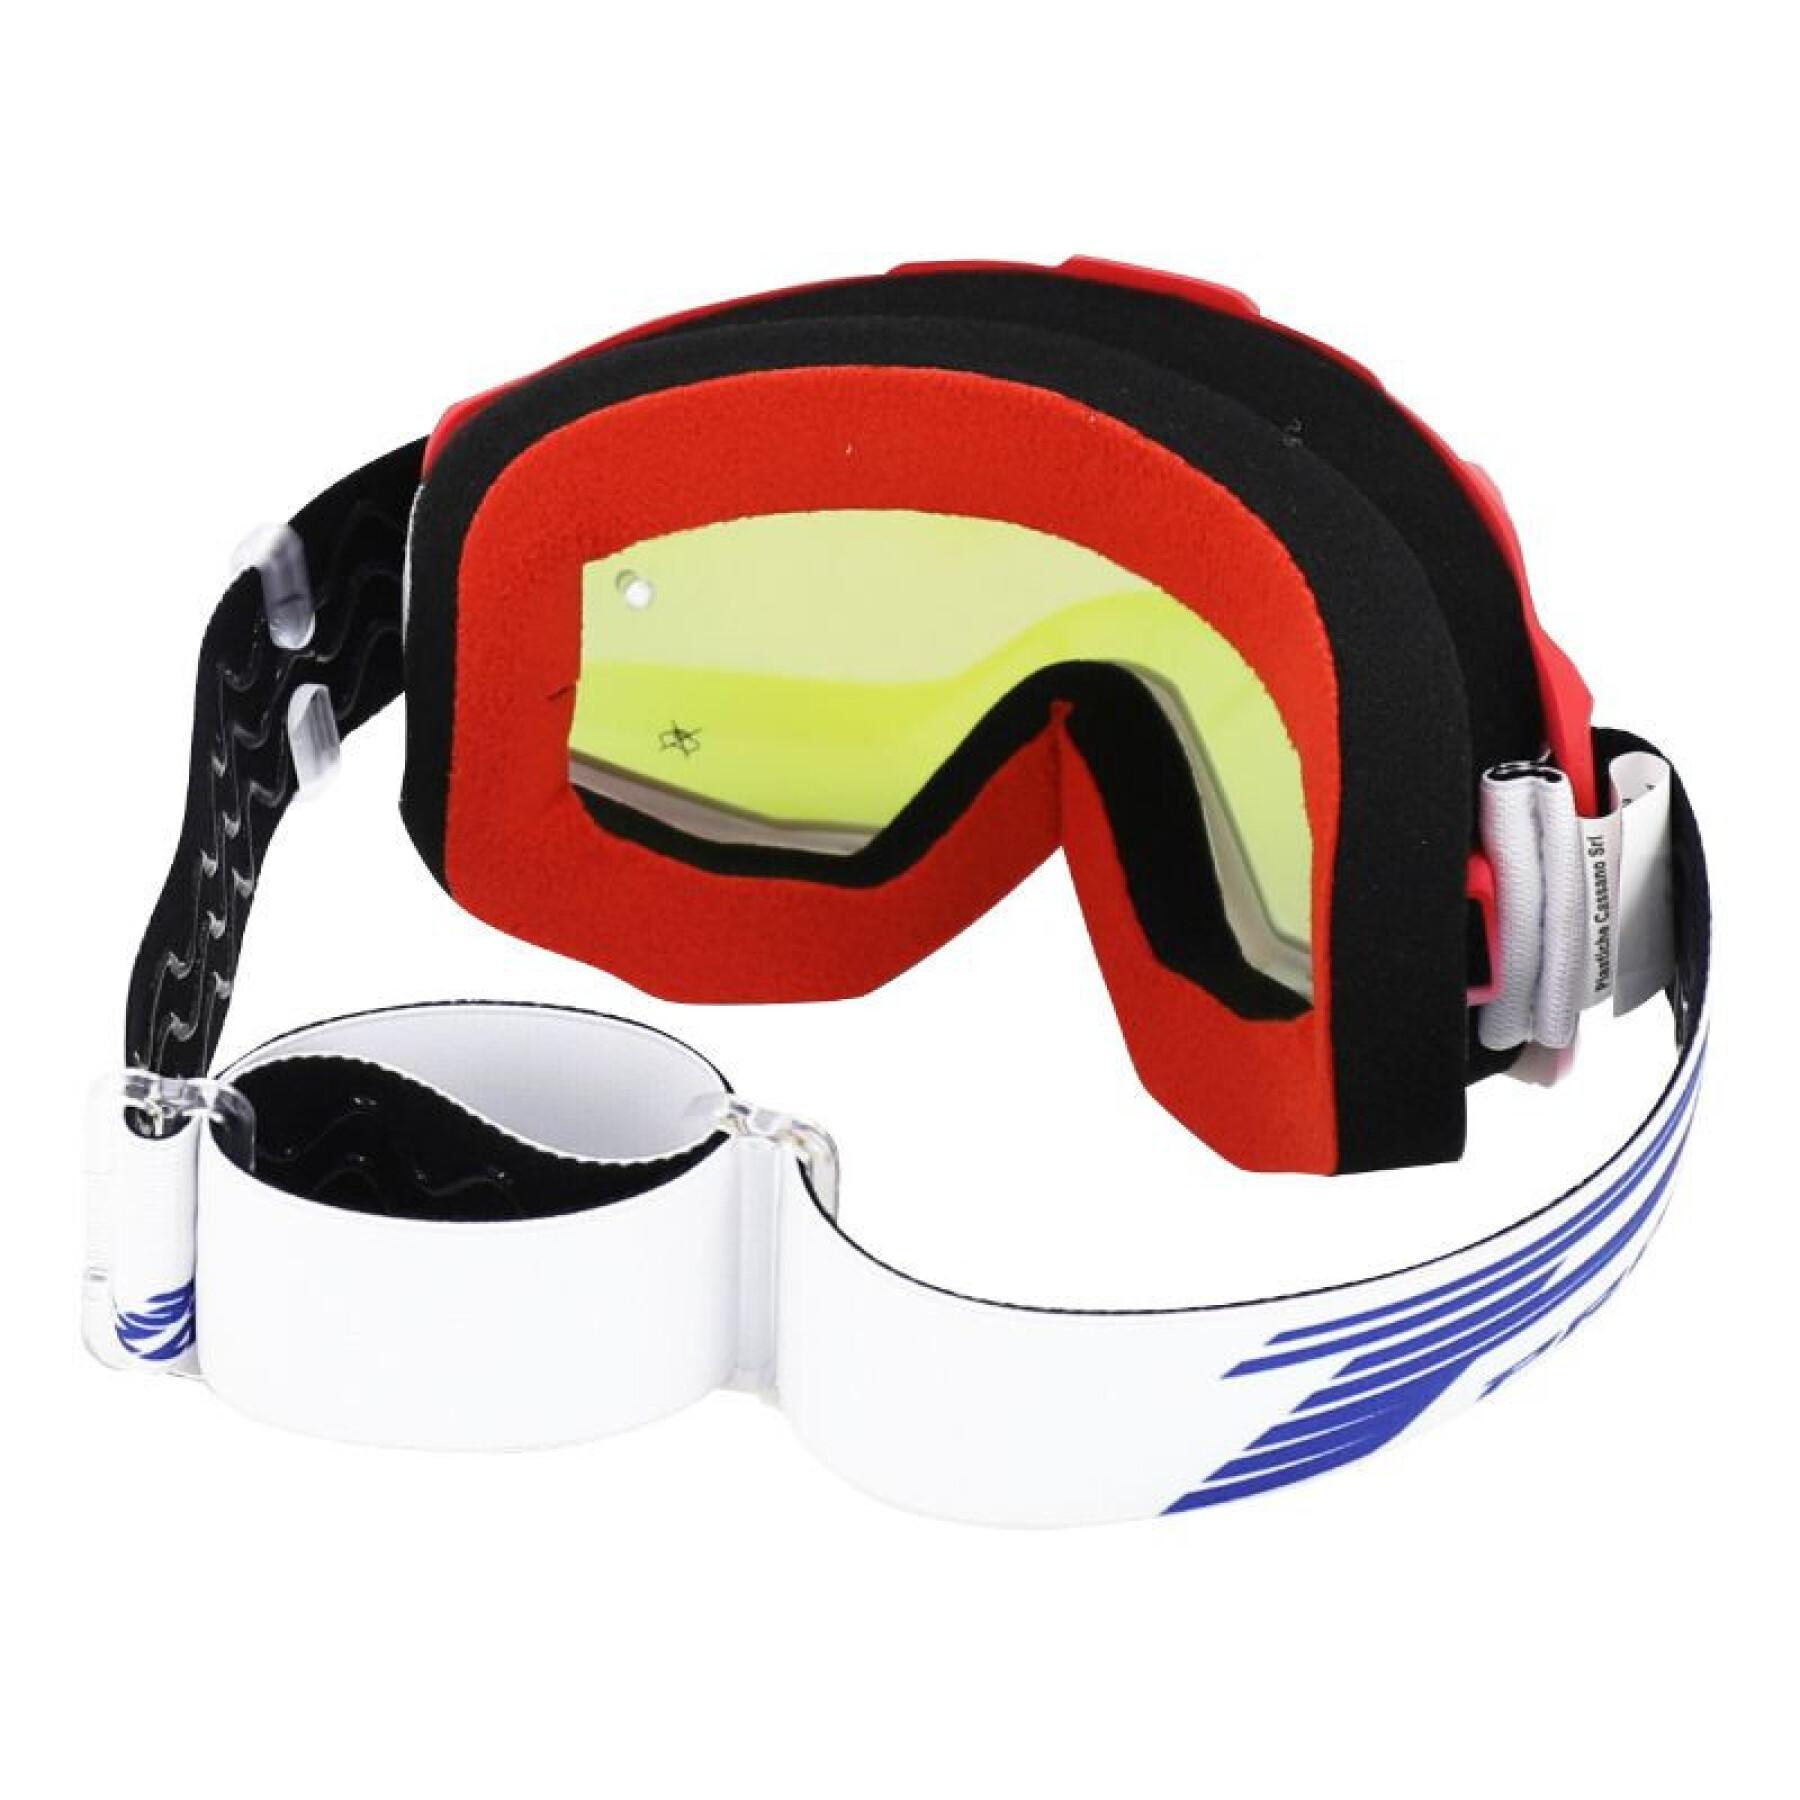 Masque moto cross écran miroir anti-rayures/anti U.V. compatible avec port lunettes de vue Progrip 3201 FL Atzaki